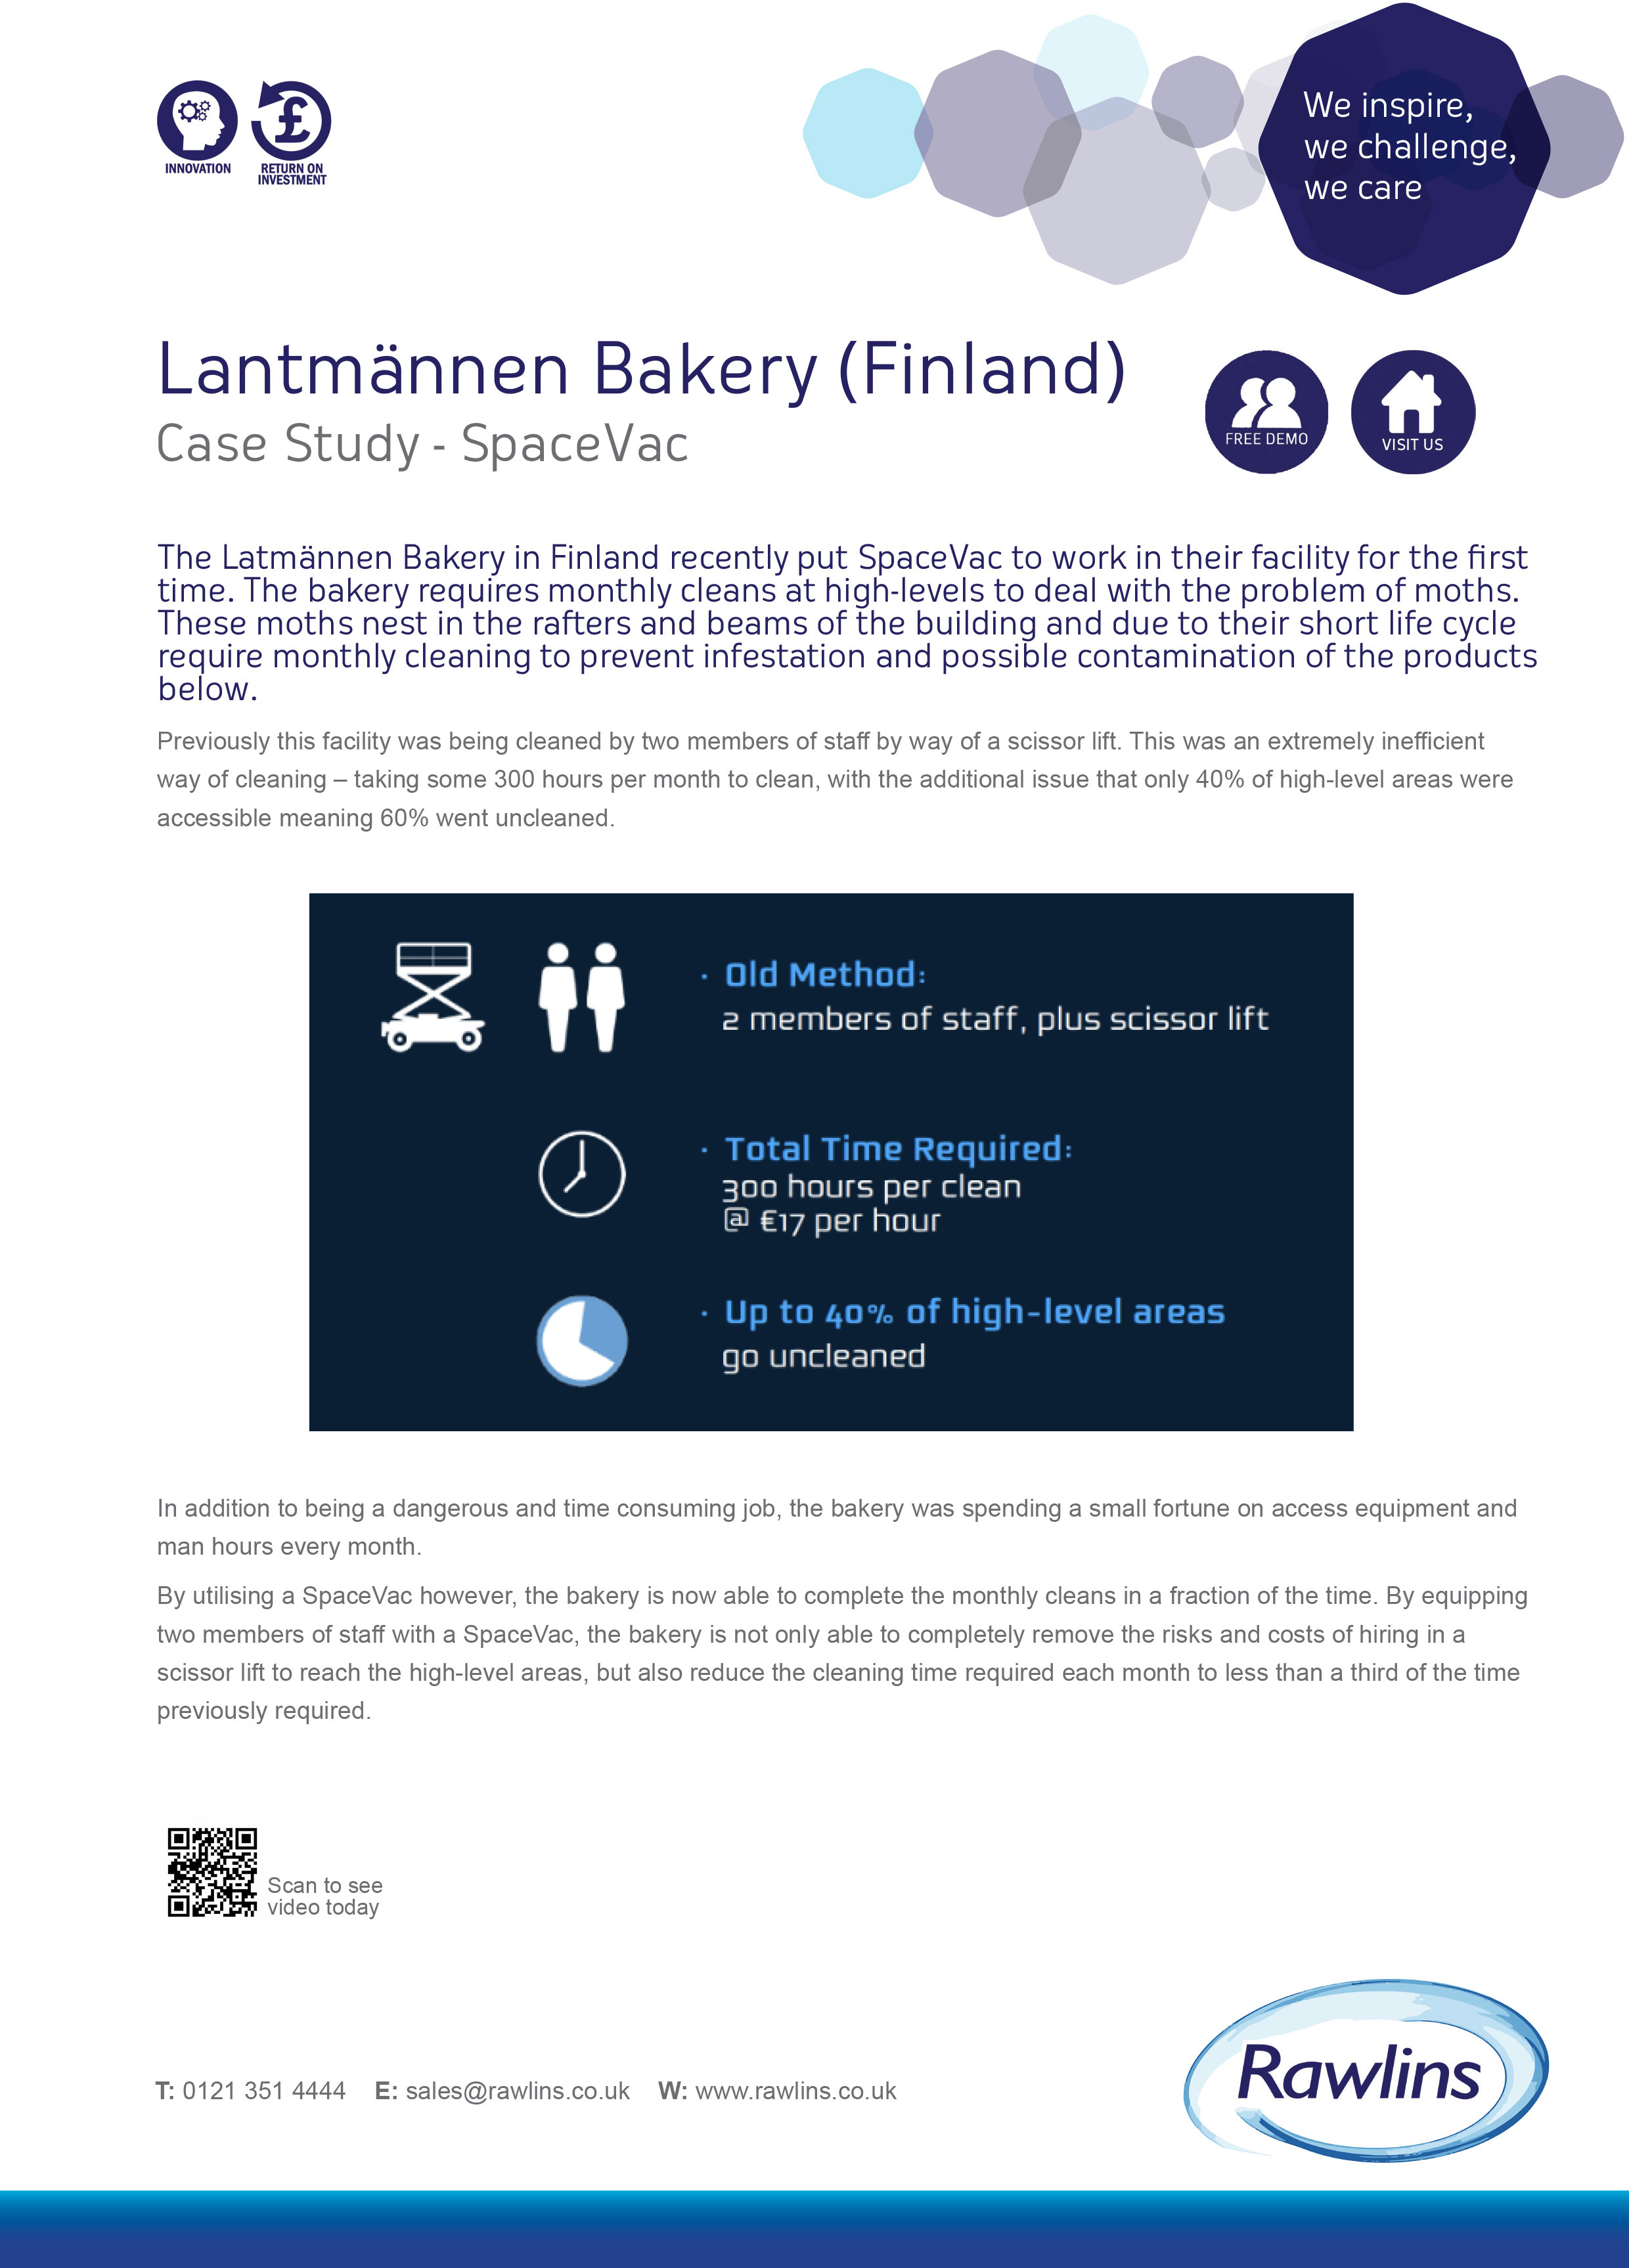 Case Study - Lantmannen Bakery